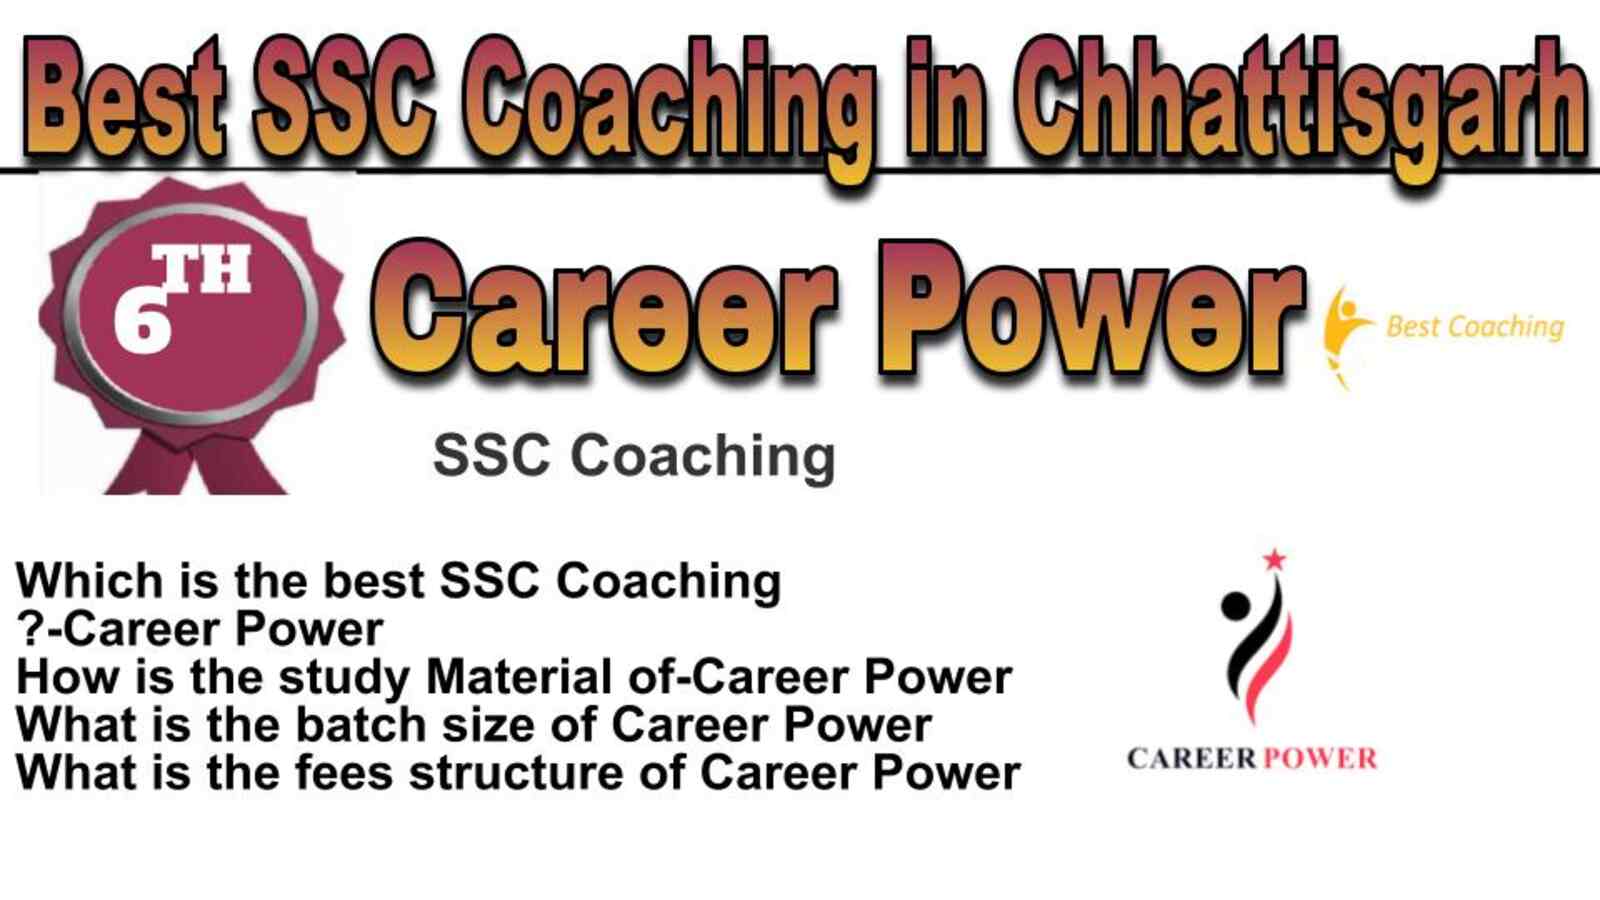 Rank 6 best SSC coaching in Chhattisgarh